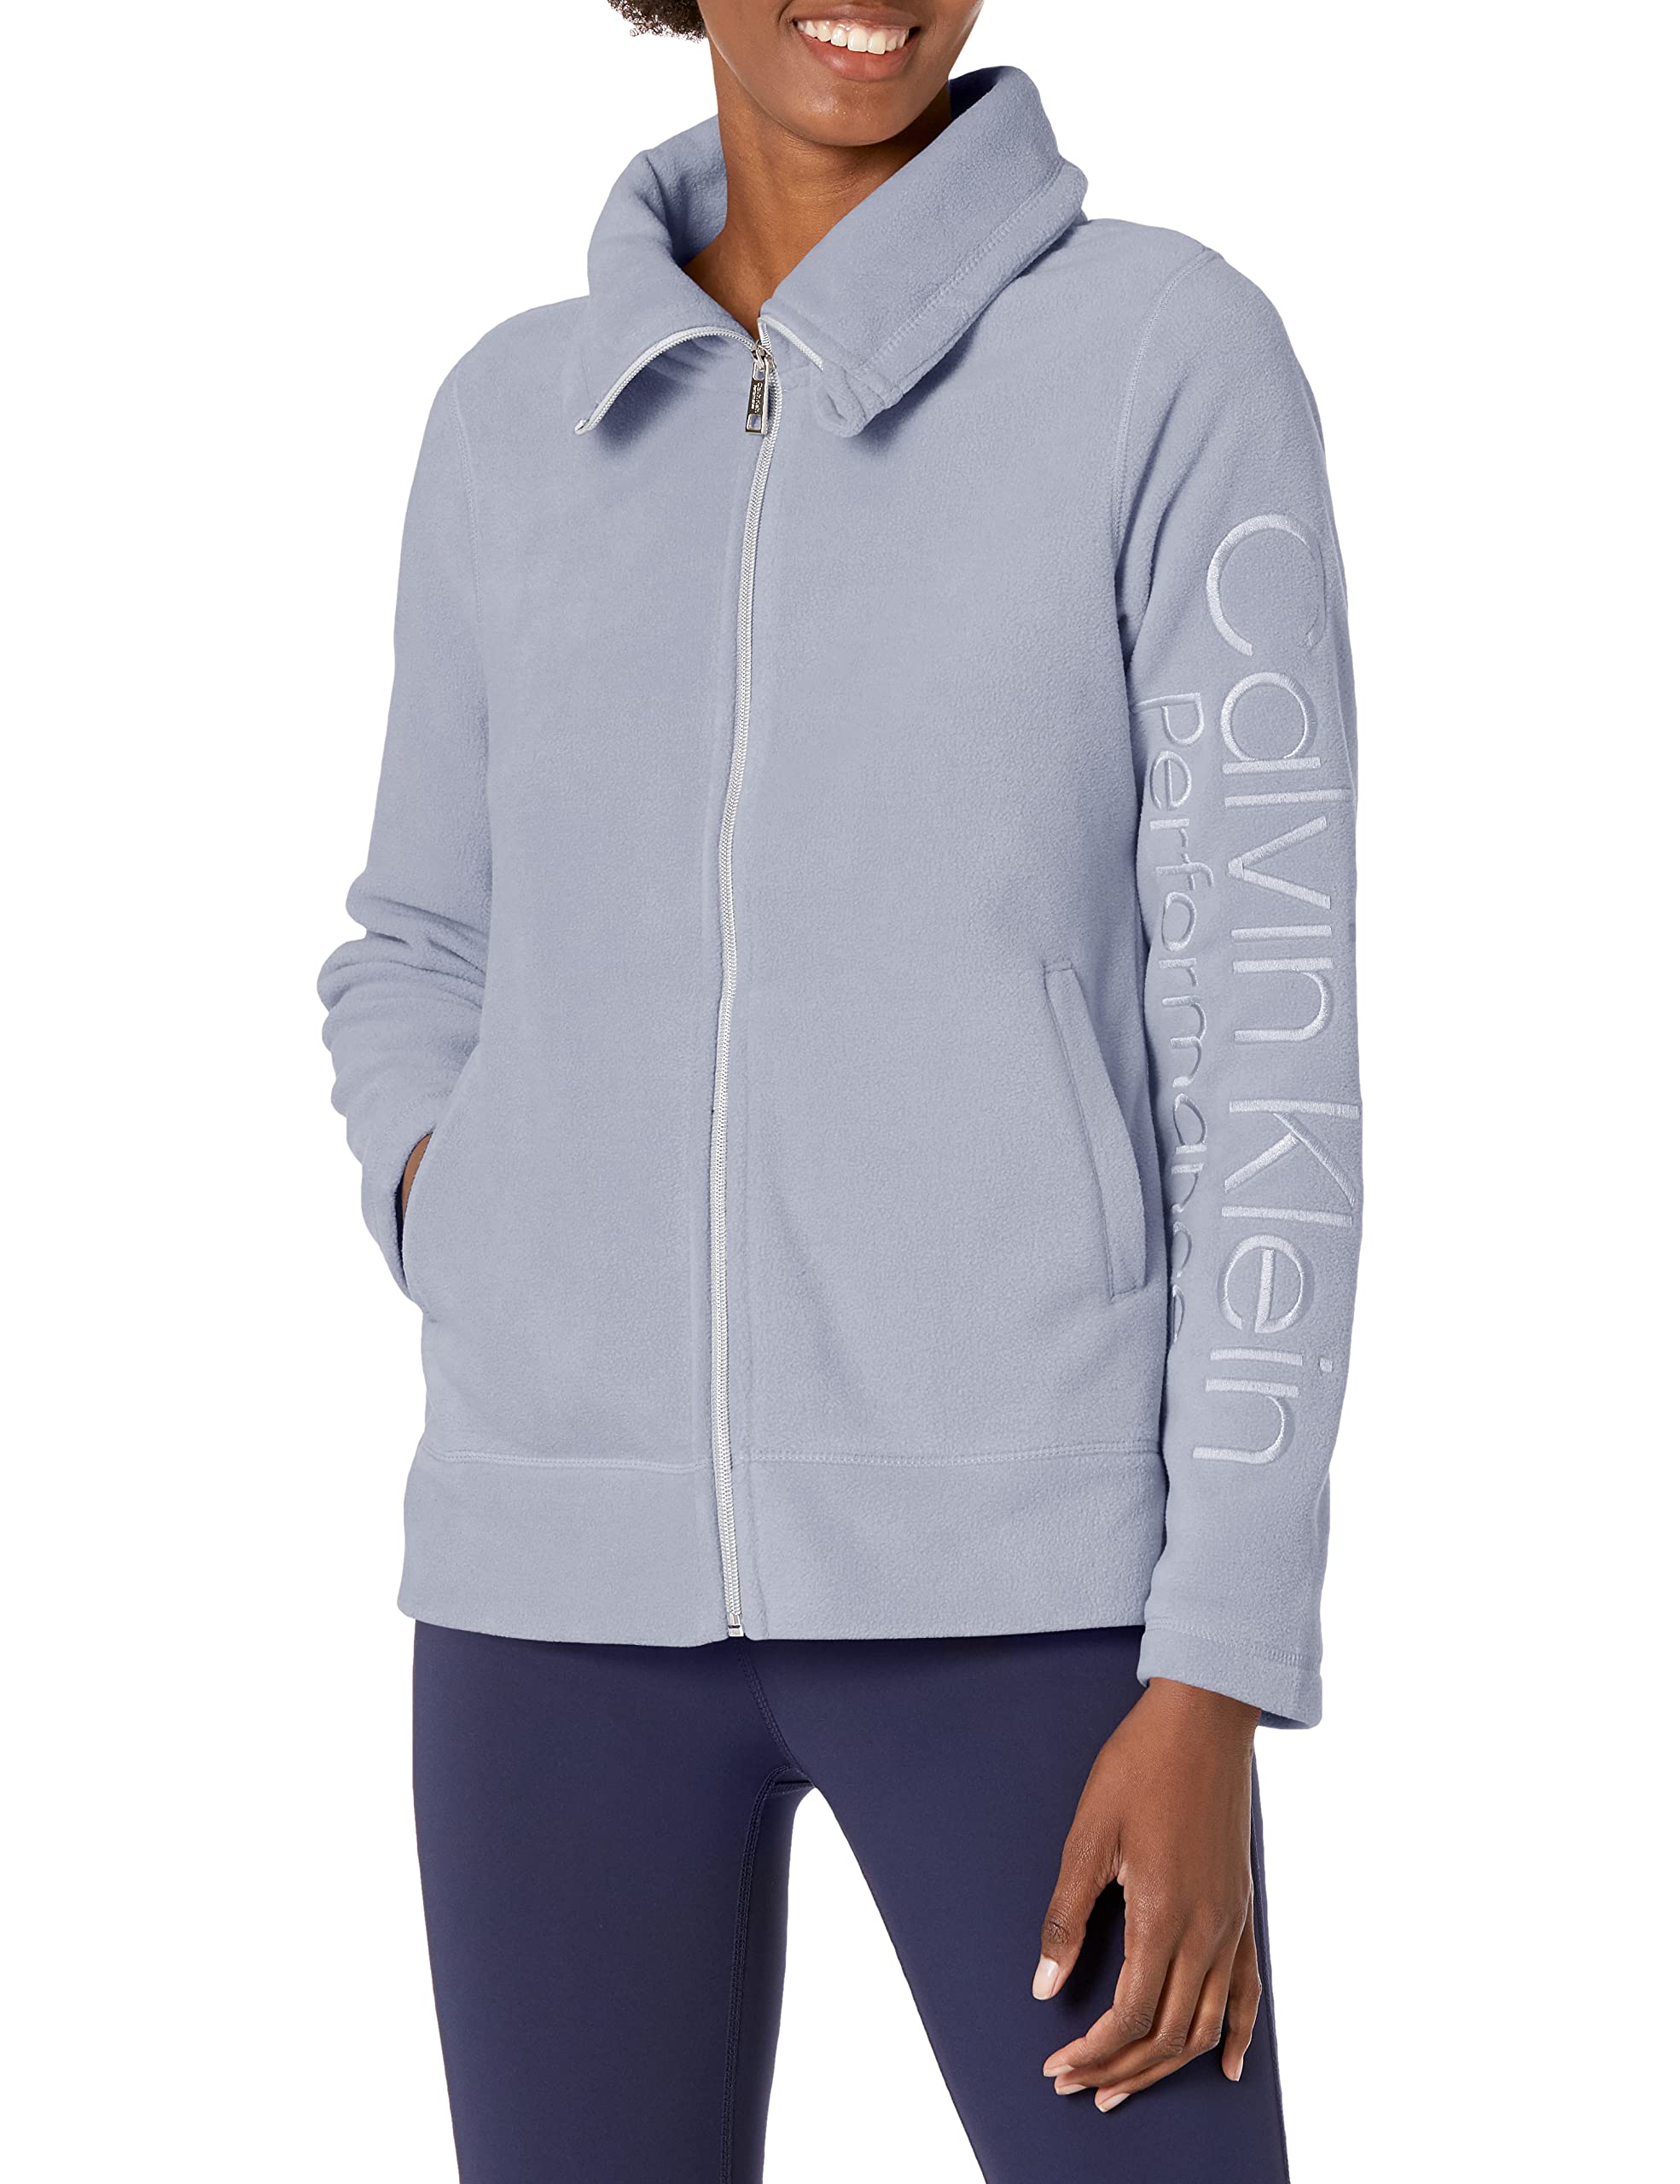 Mua Calvin Klein Performance Women's Tech Fleece Jacket trên Amazon Mỹ  chính hãng 2023 | Giaonhan247